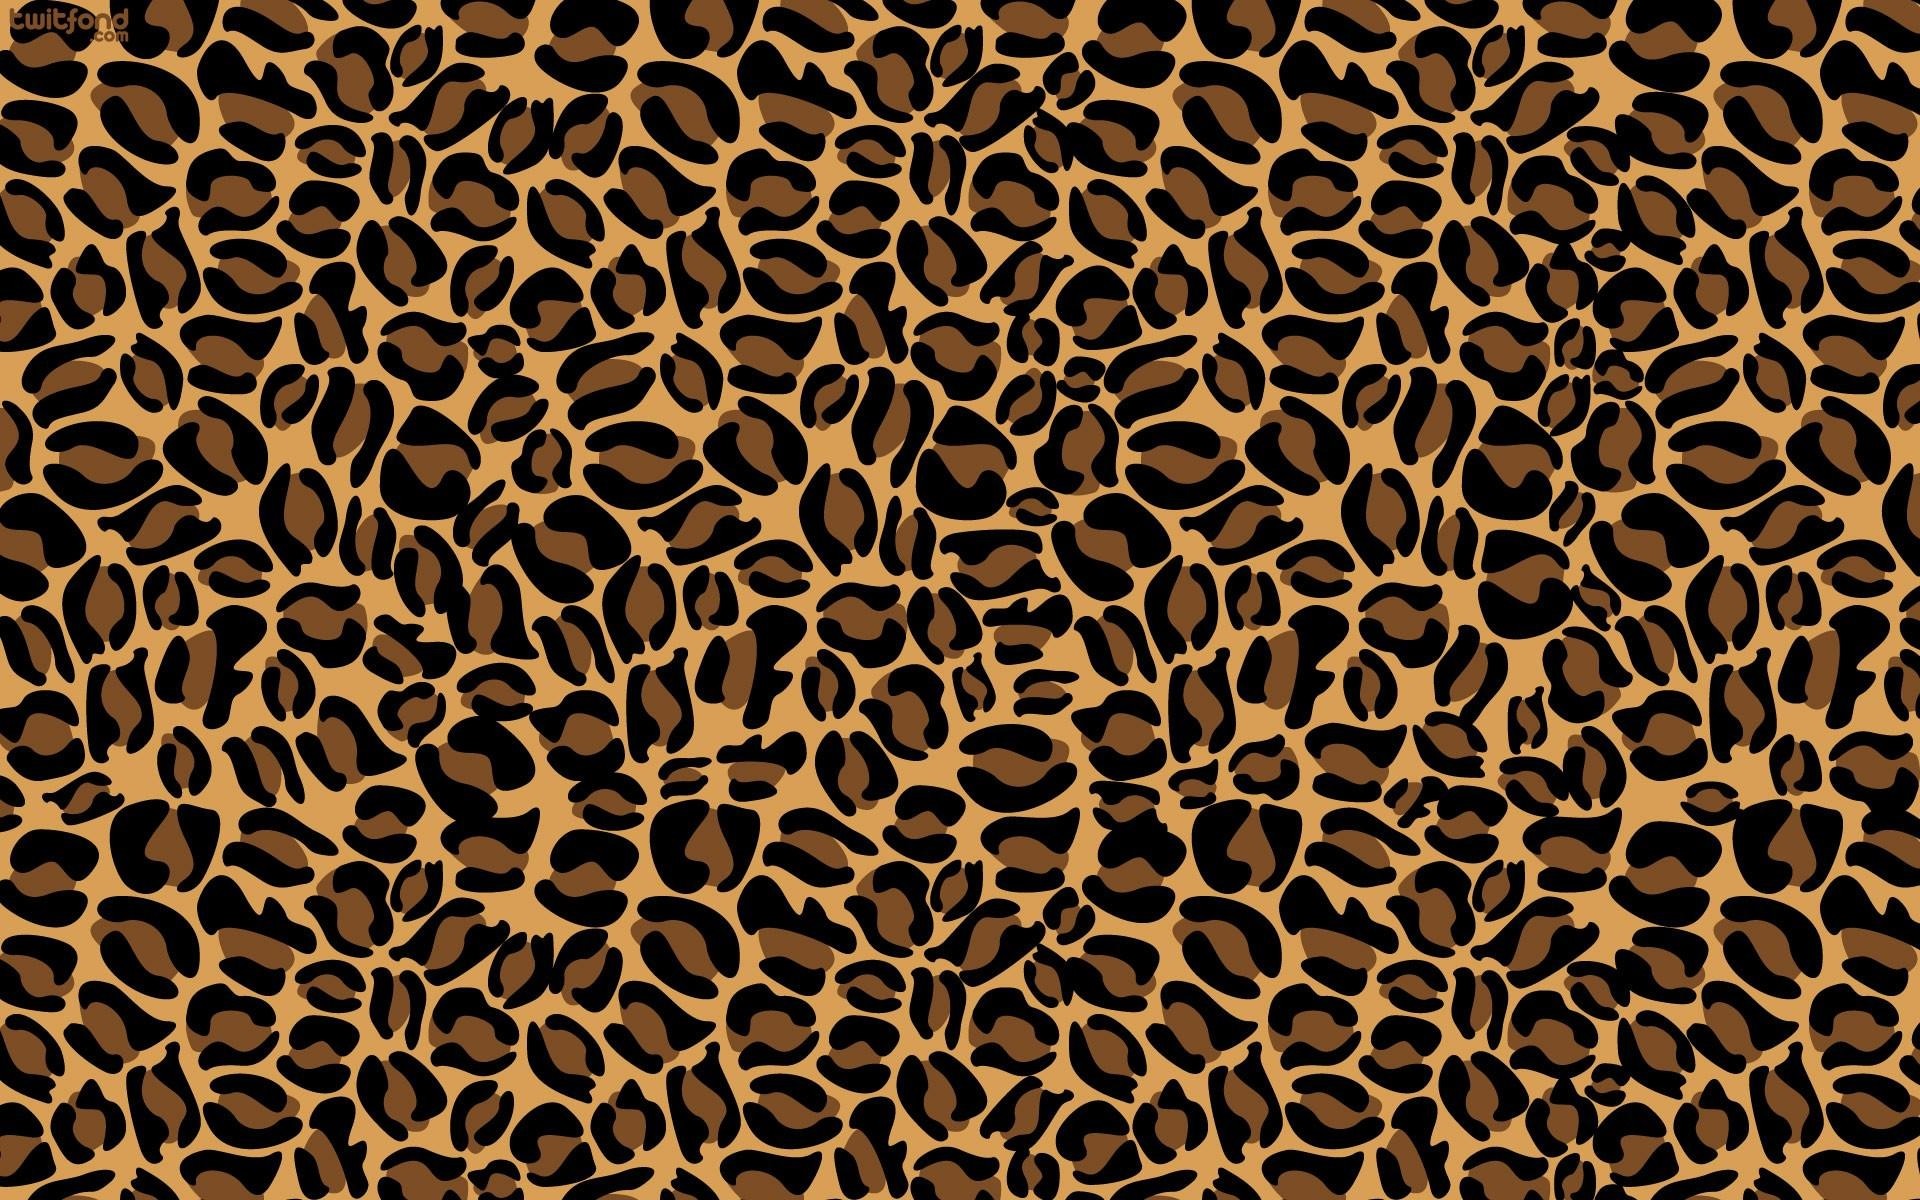 1. Cheetah Print Nail Design Picture Ideas - wide 5